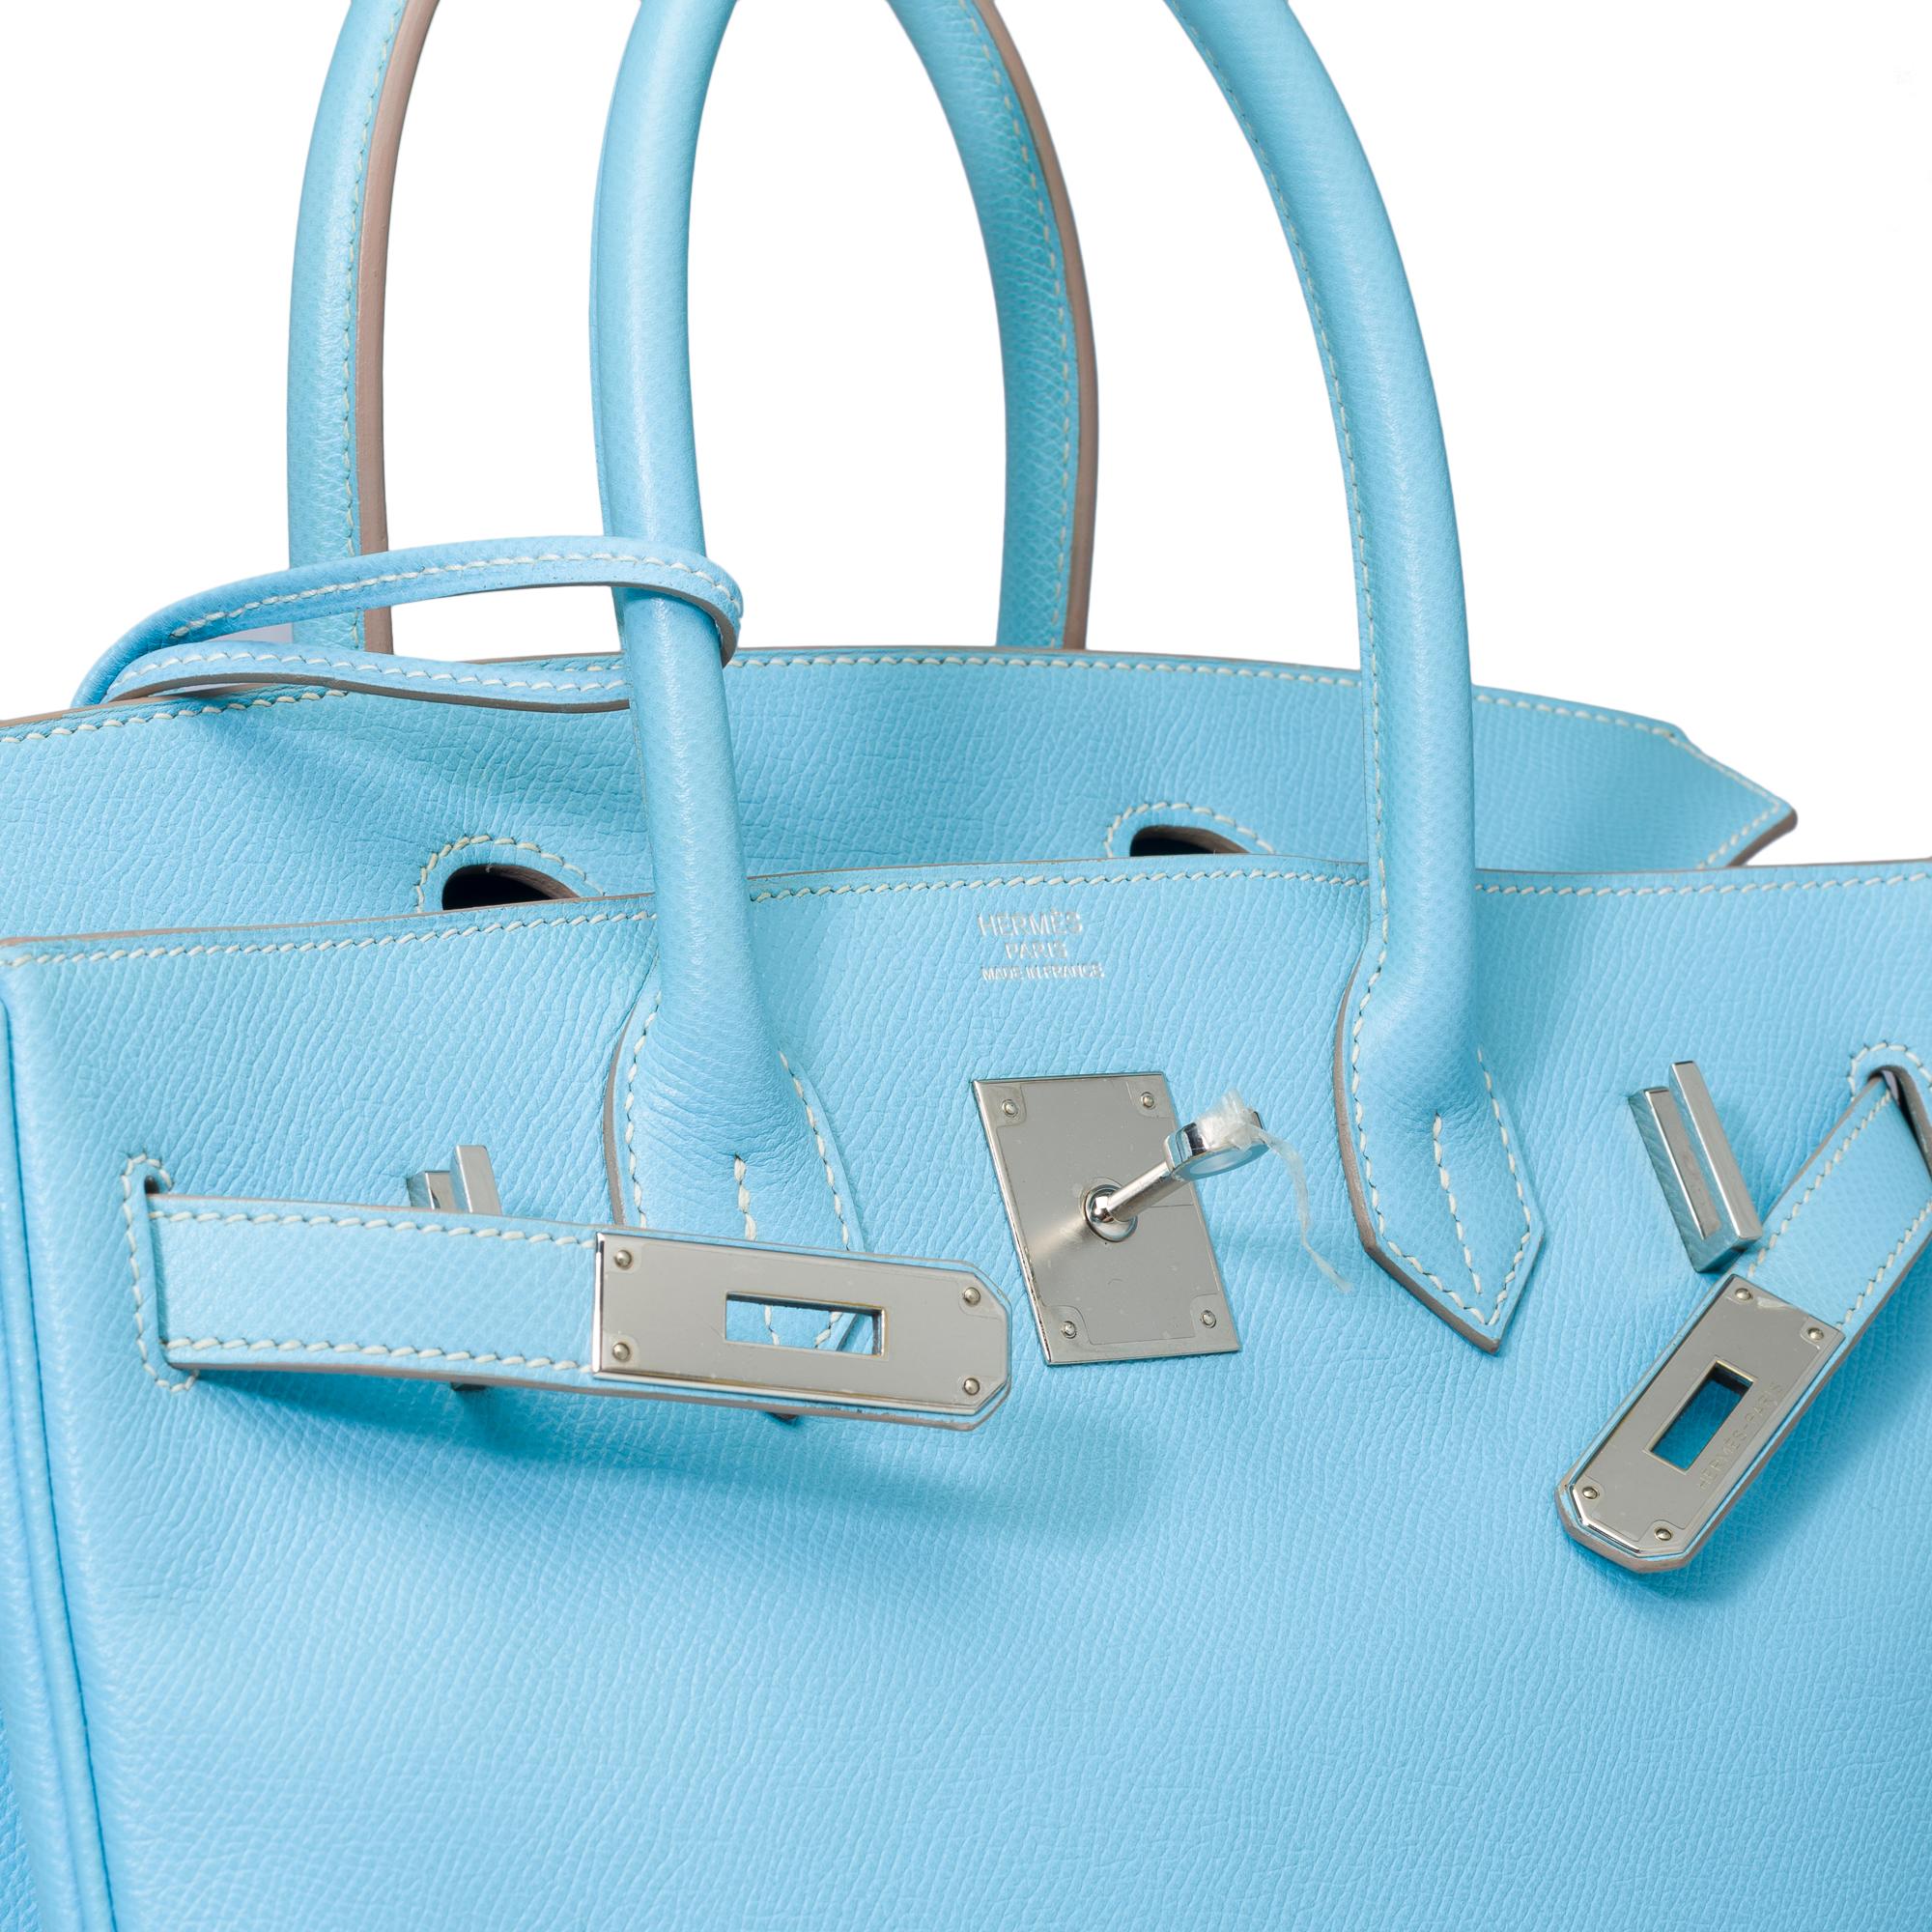 Rare Hermes Birkin 30 Candy Edition handbag in Celeste Blue Epsom leather, SHW 4